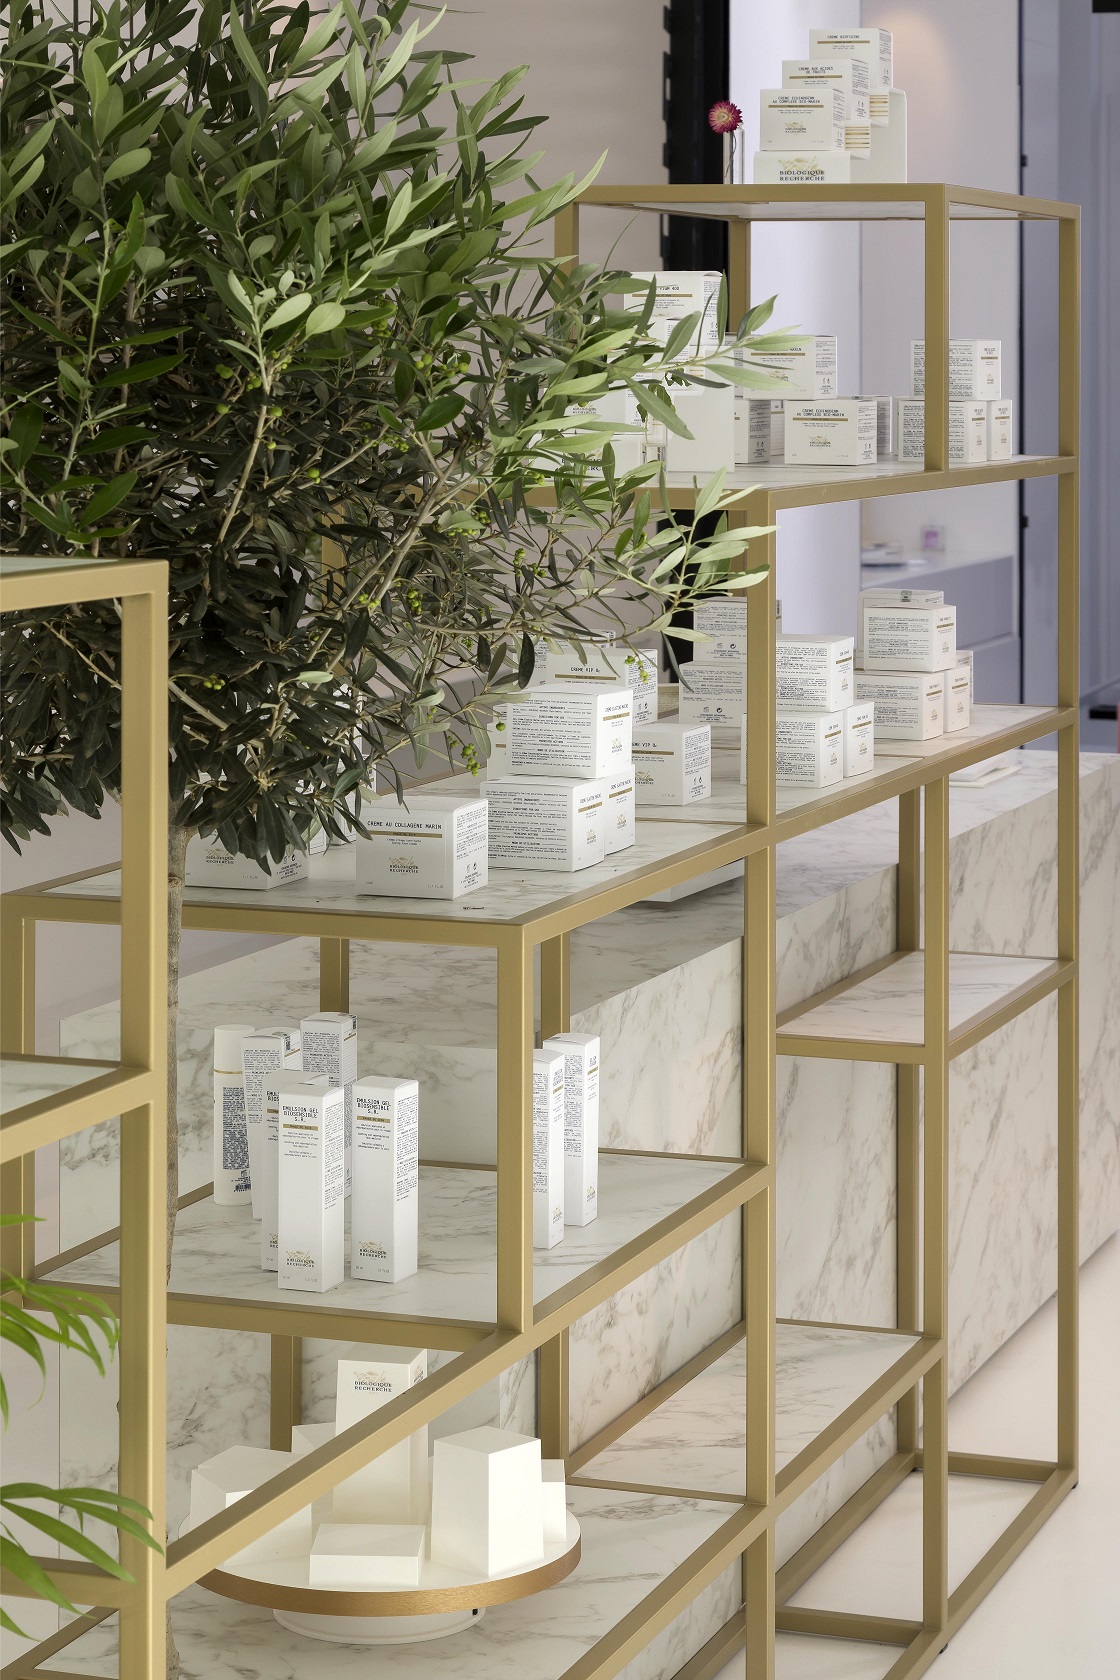 Skin Solutions Brussel schoonheidsinstituut PAC interiors